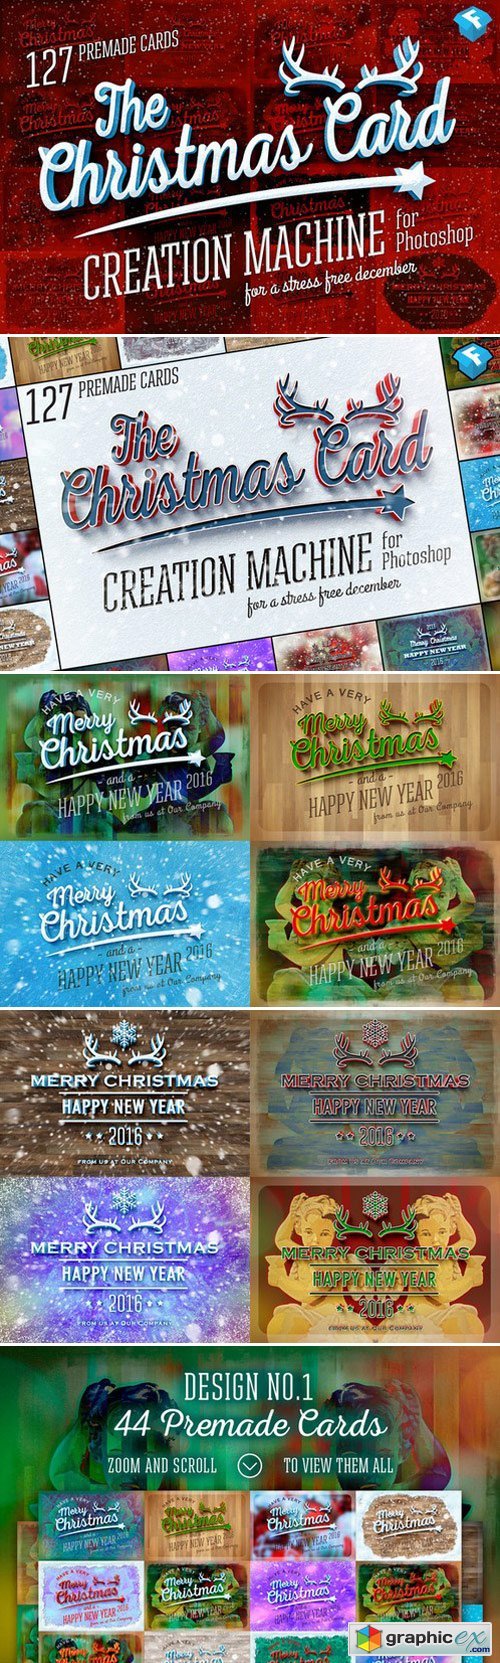 Christmas Card Creation Machine